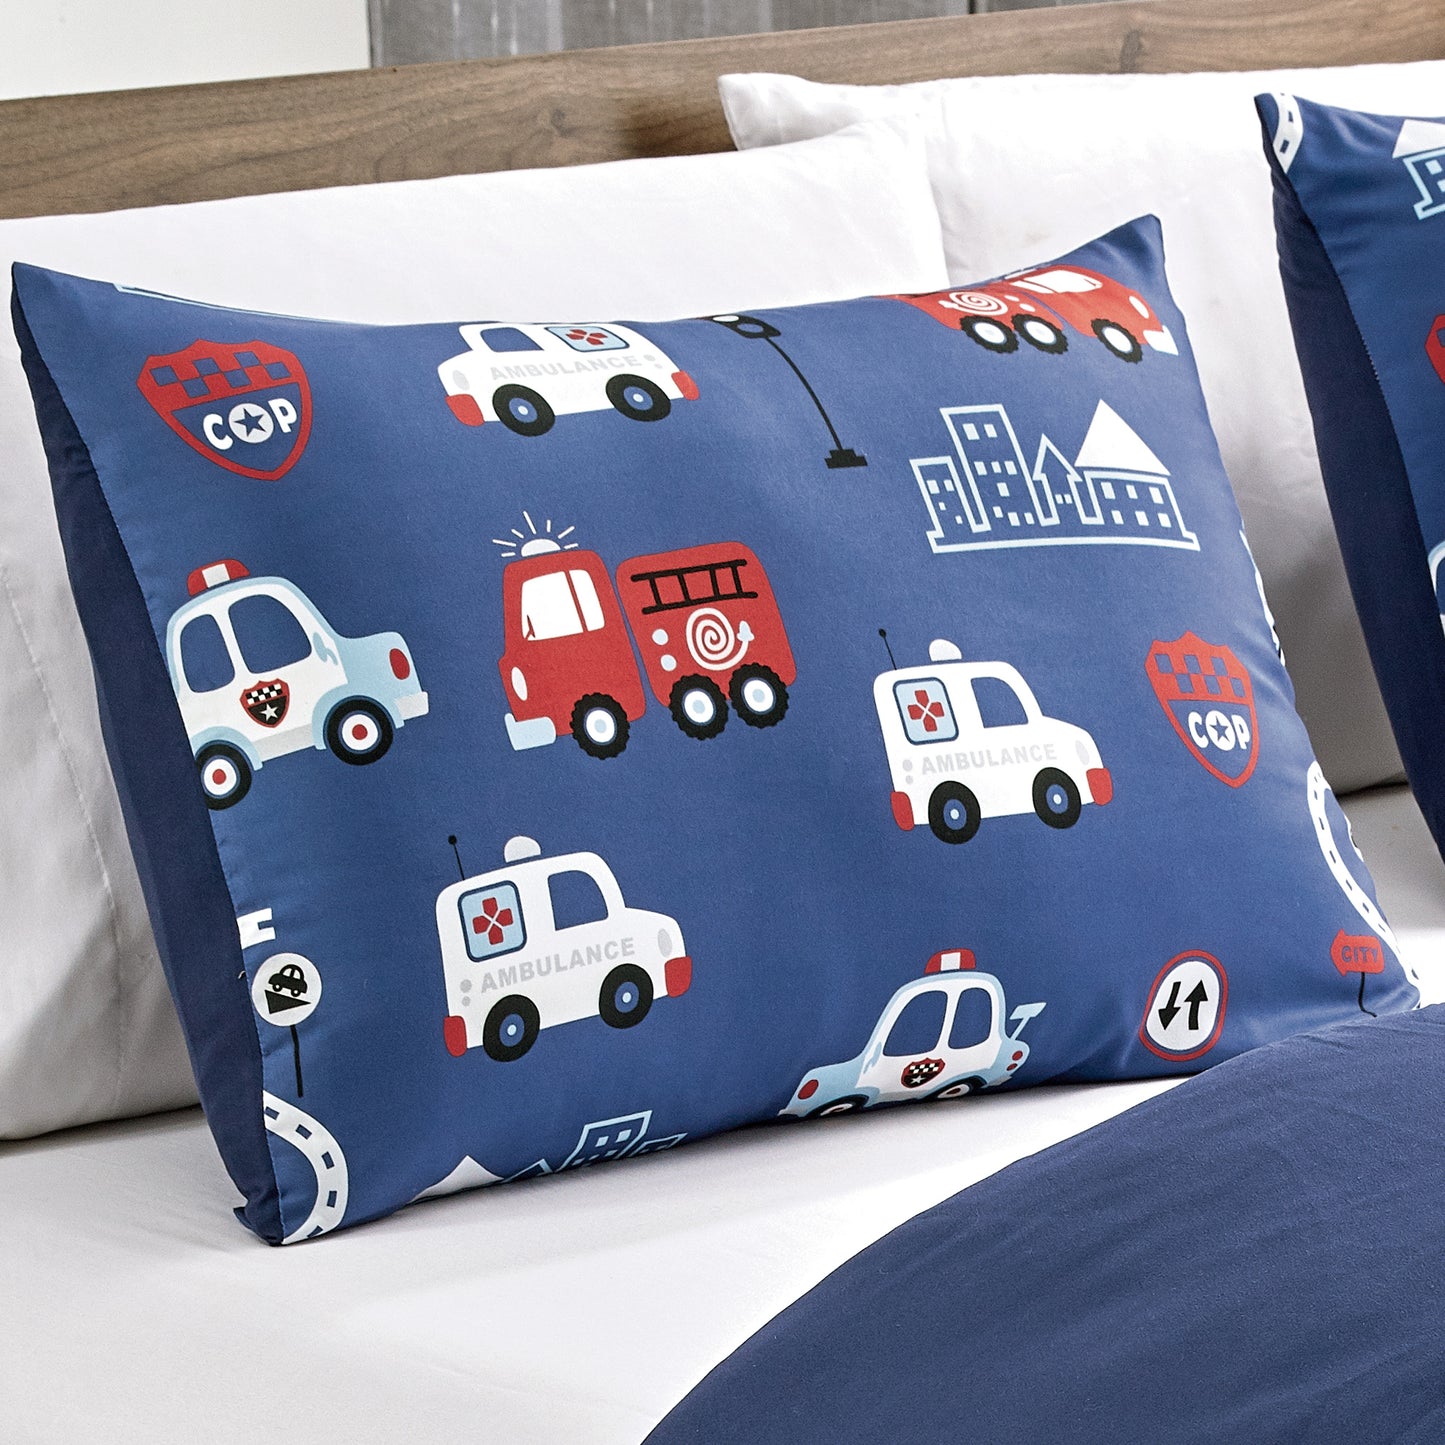 Firetruck First Responder Heroes Kids Microfiber Printed Comforter Set with Plush Pillow